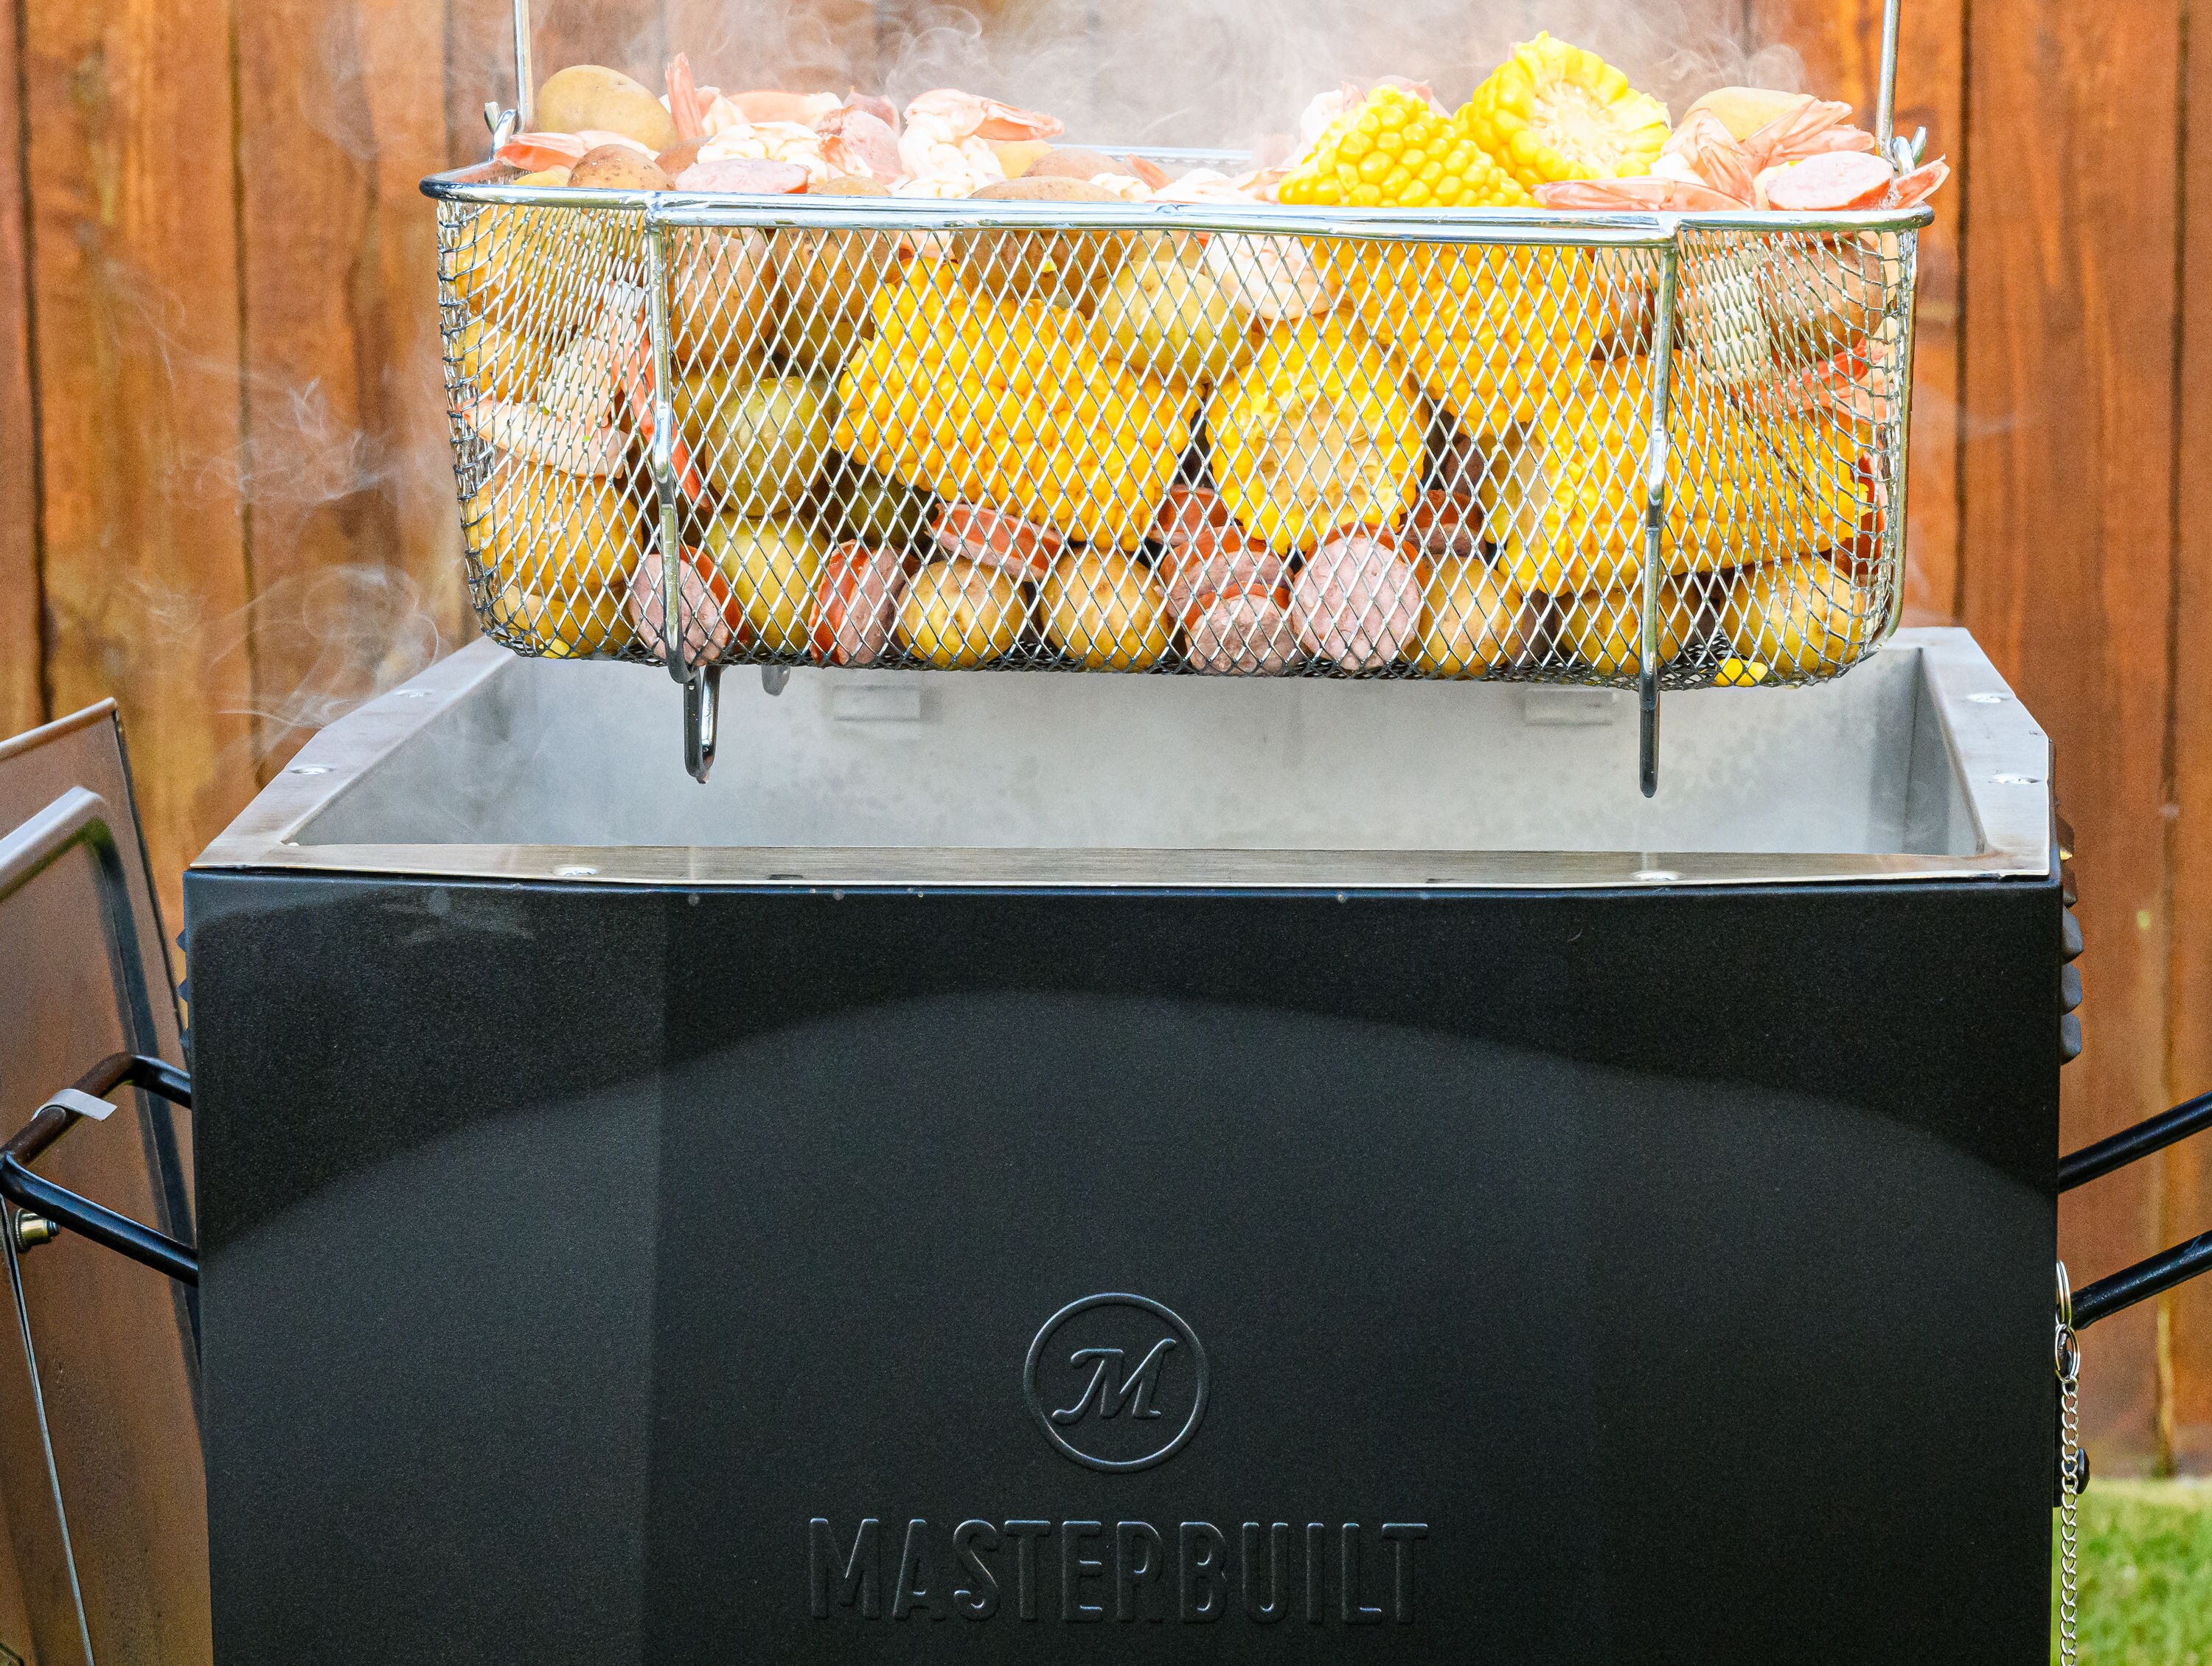 Masterbuilt 20 Quart 6-in-1 Outdoor Air Fryer for Sale in Mesquite, TX -  OfferUp